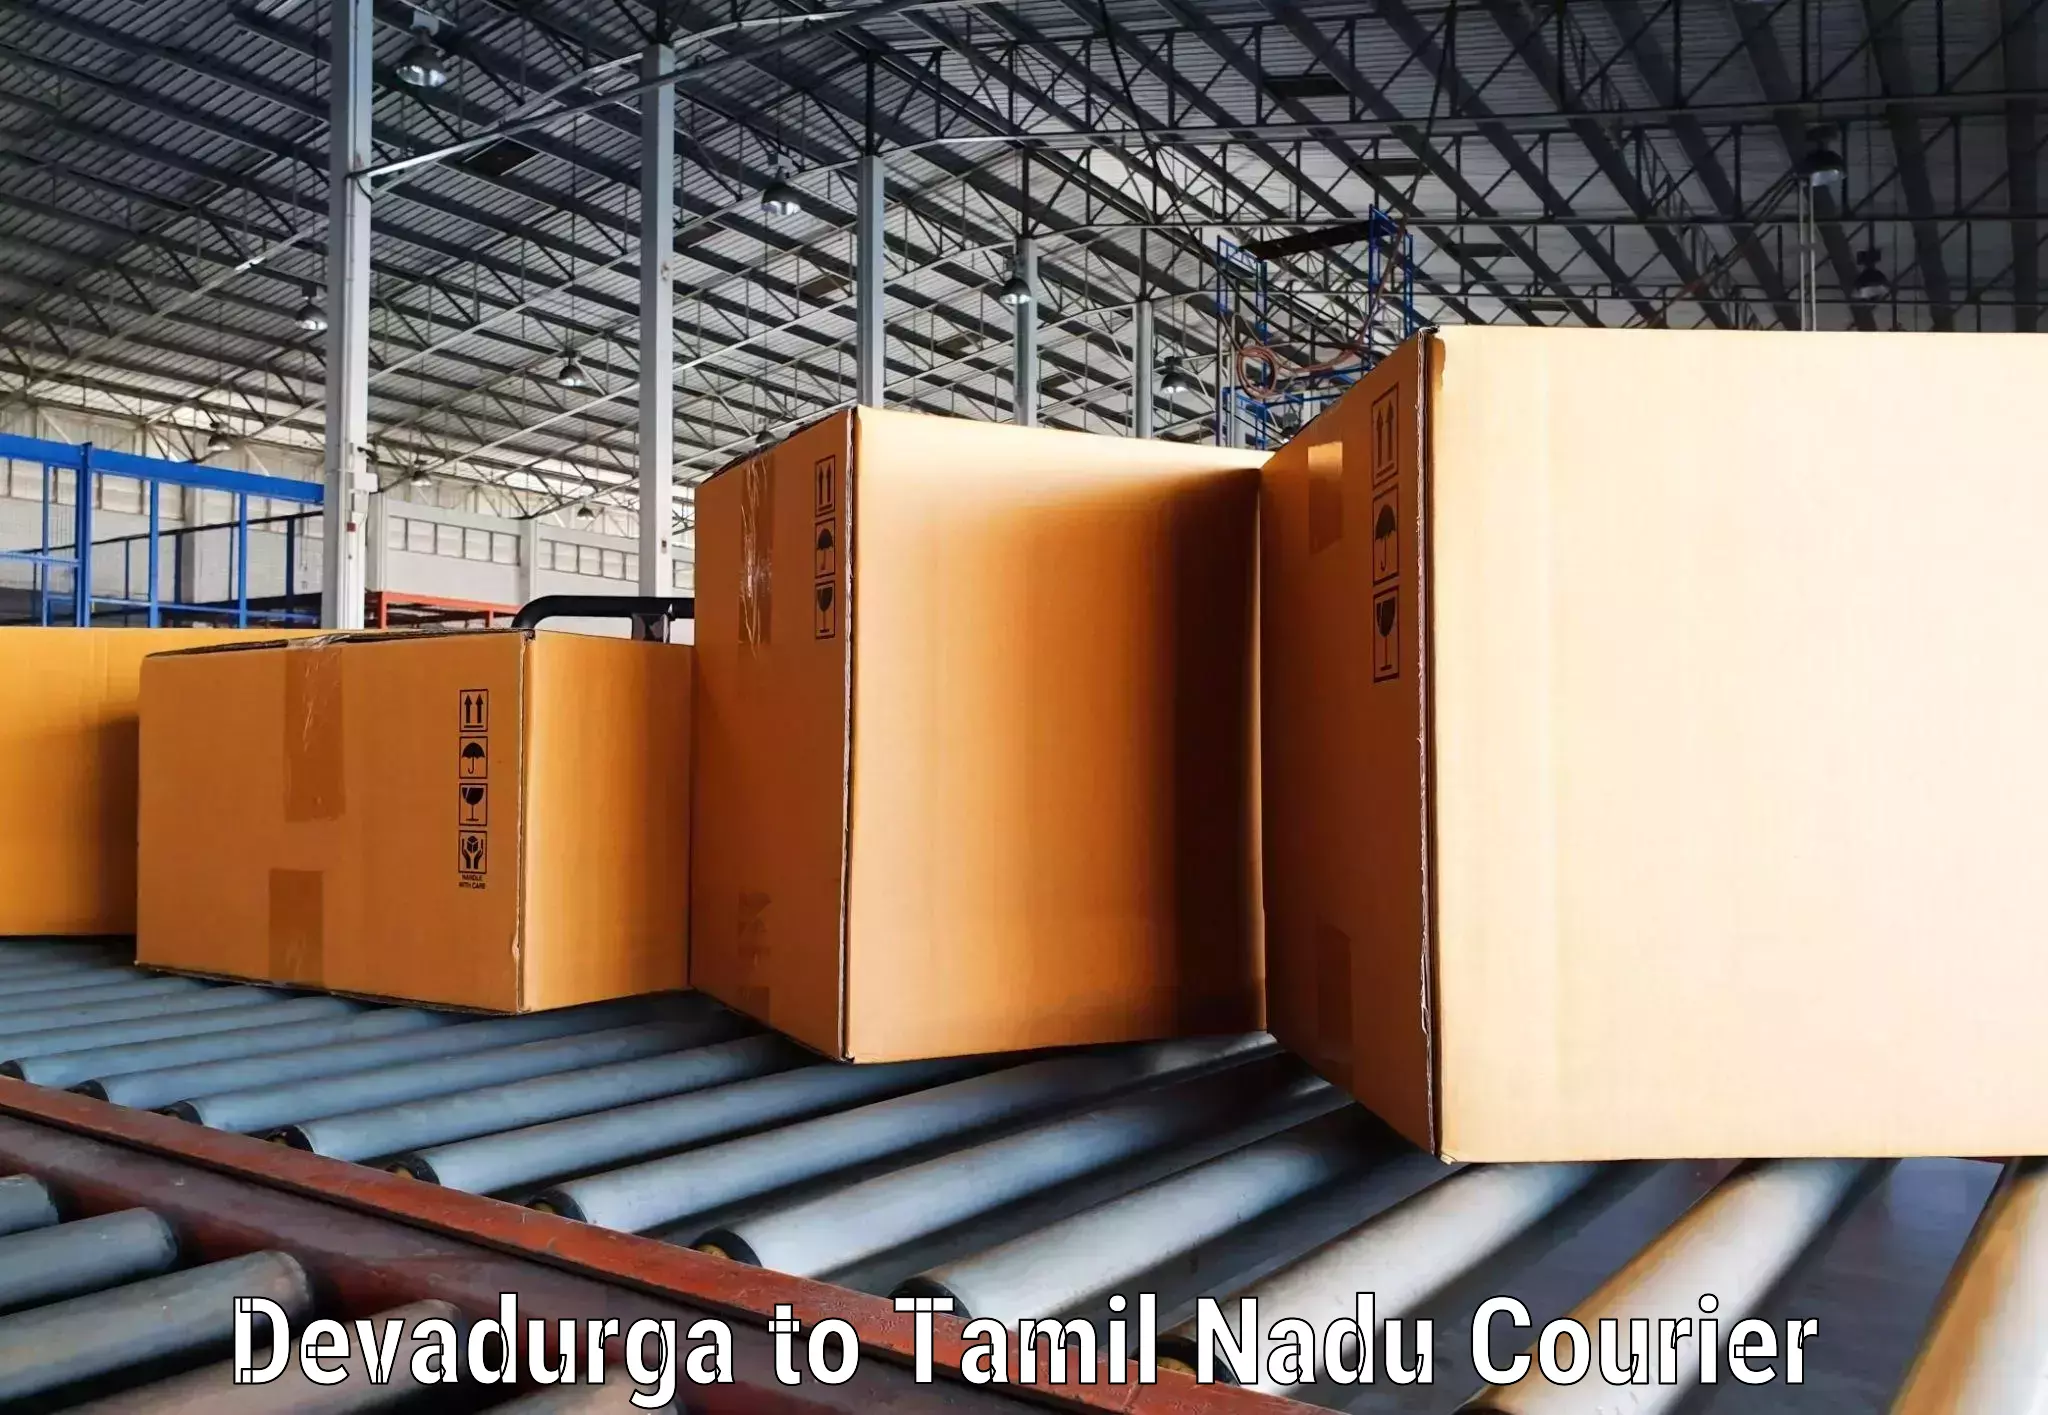 Digital courier platforms Devadurga to Tamil Nadu Agricultural University Coimbatore